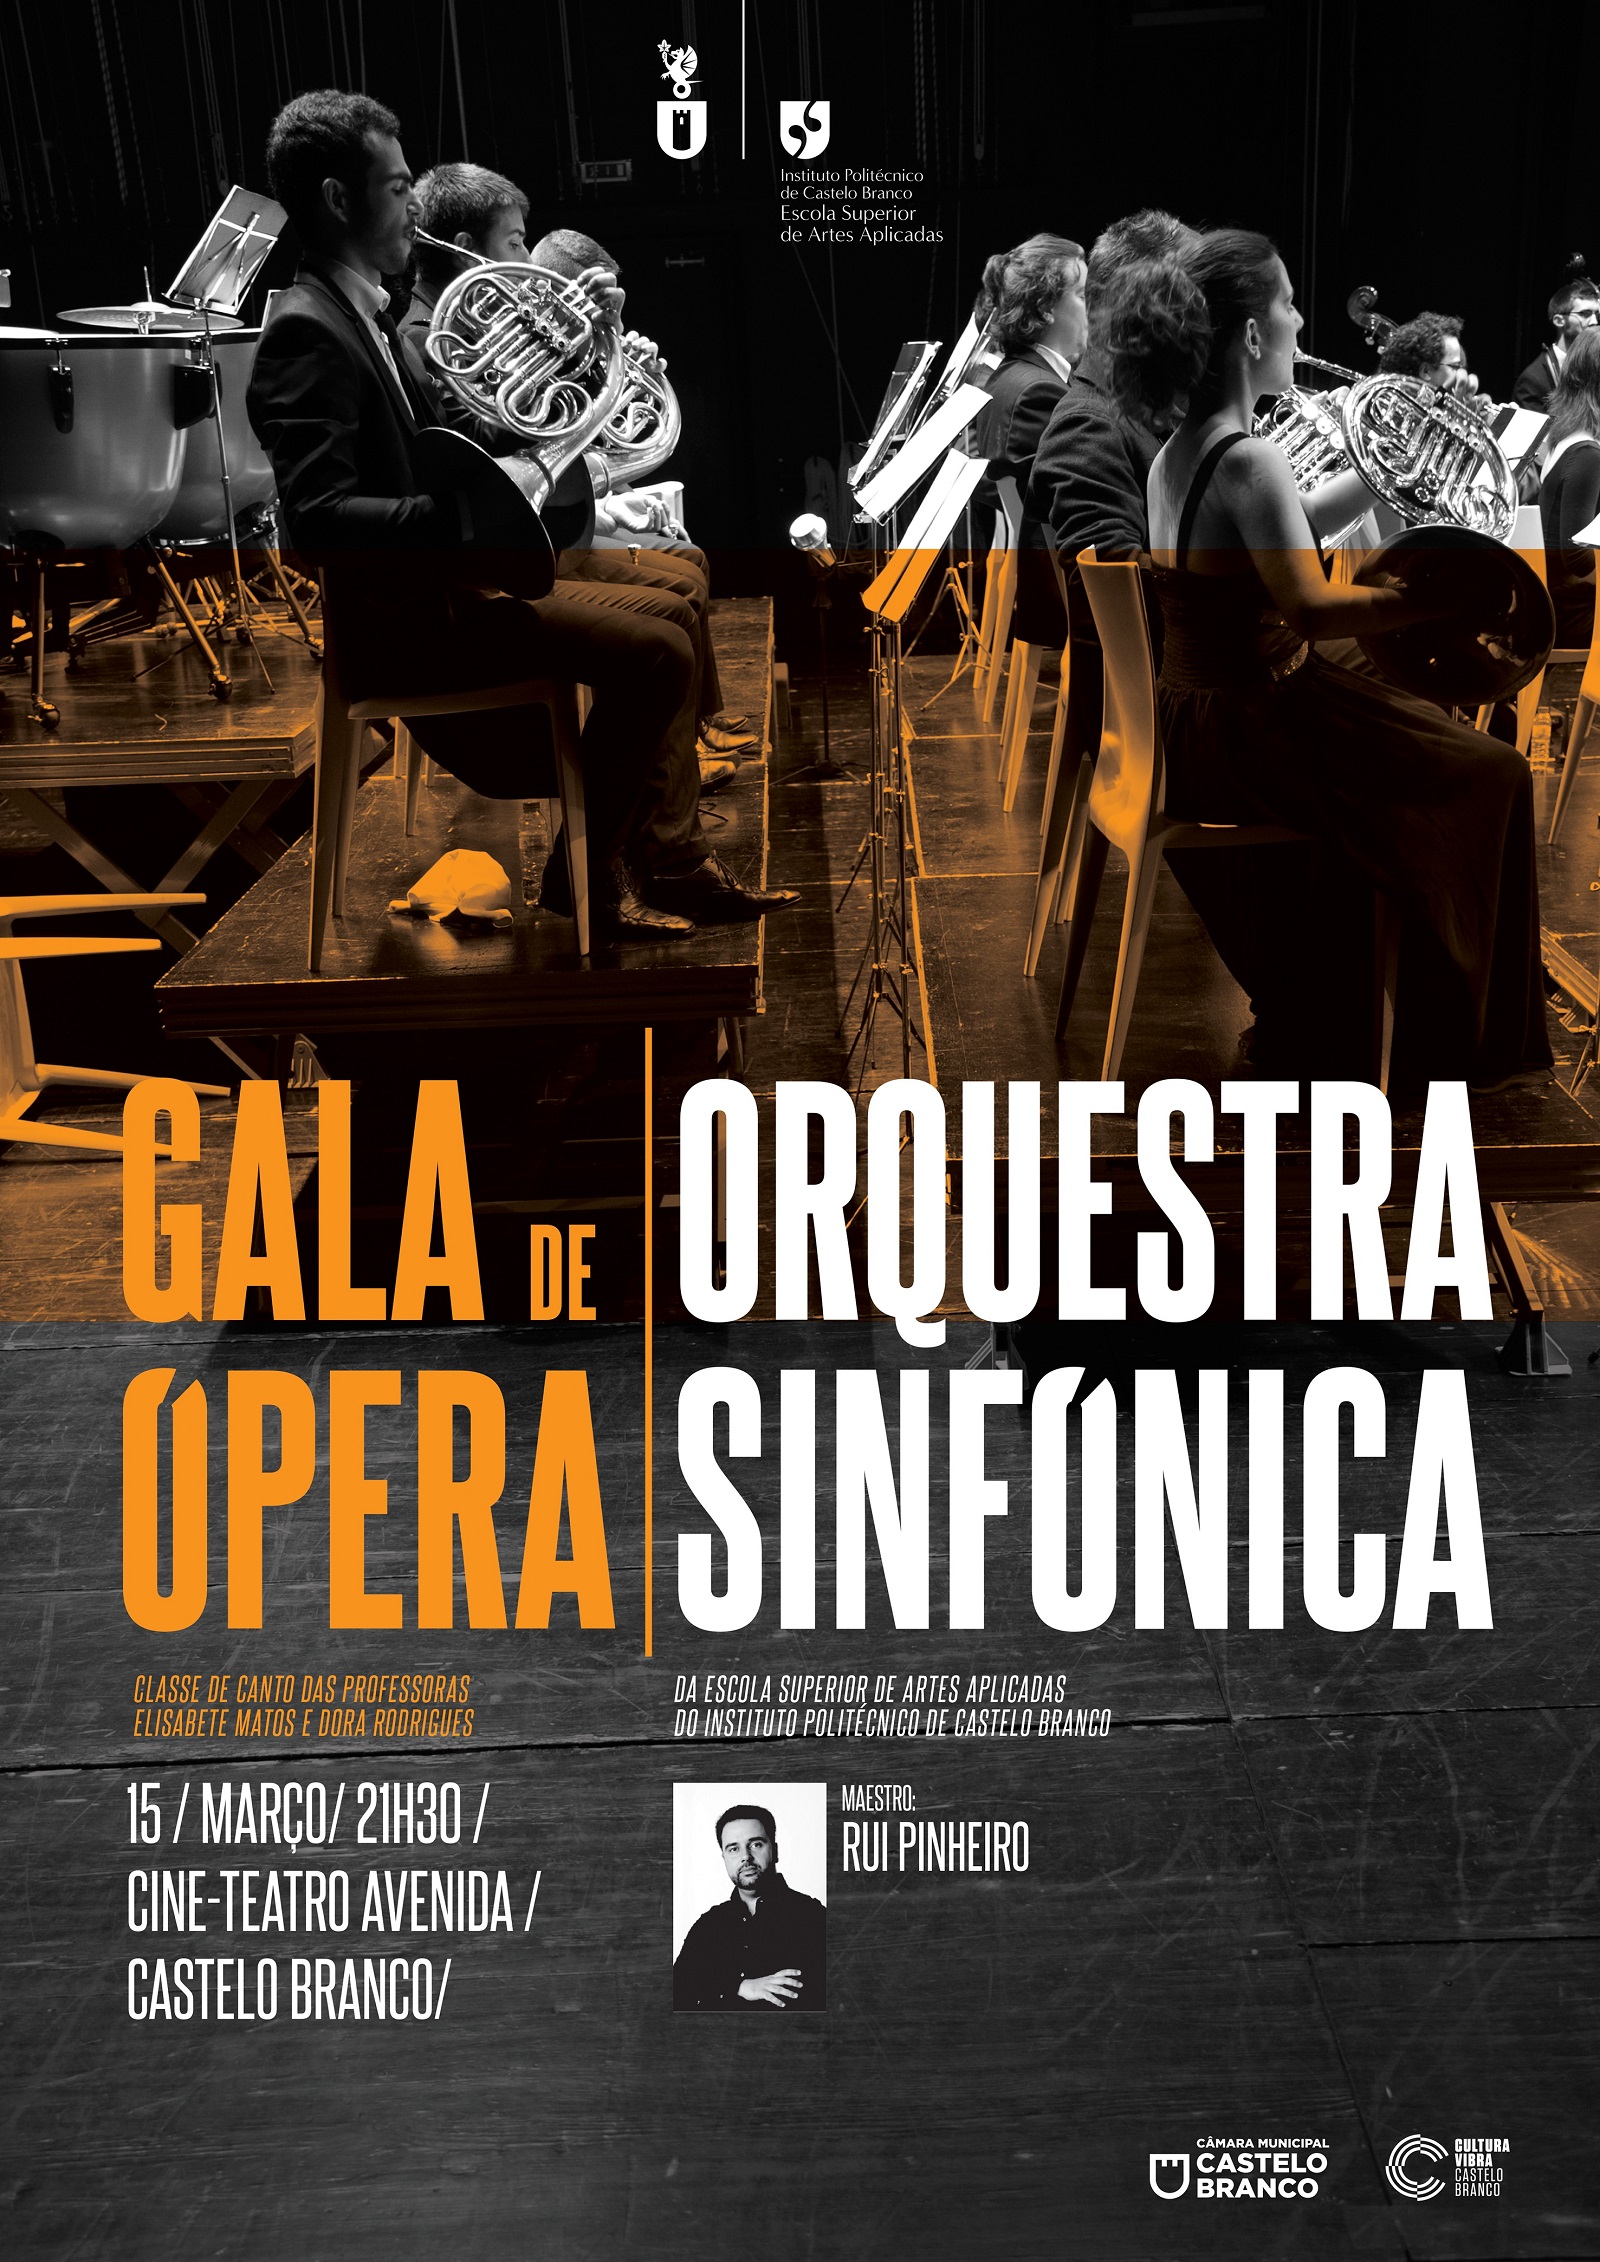 Castelo Branco: Gala de Ópera com a Orquestra Sinfónica da ESART – IPCB